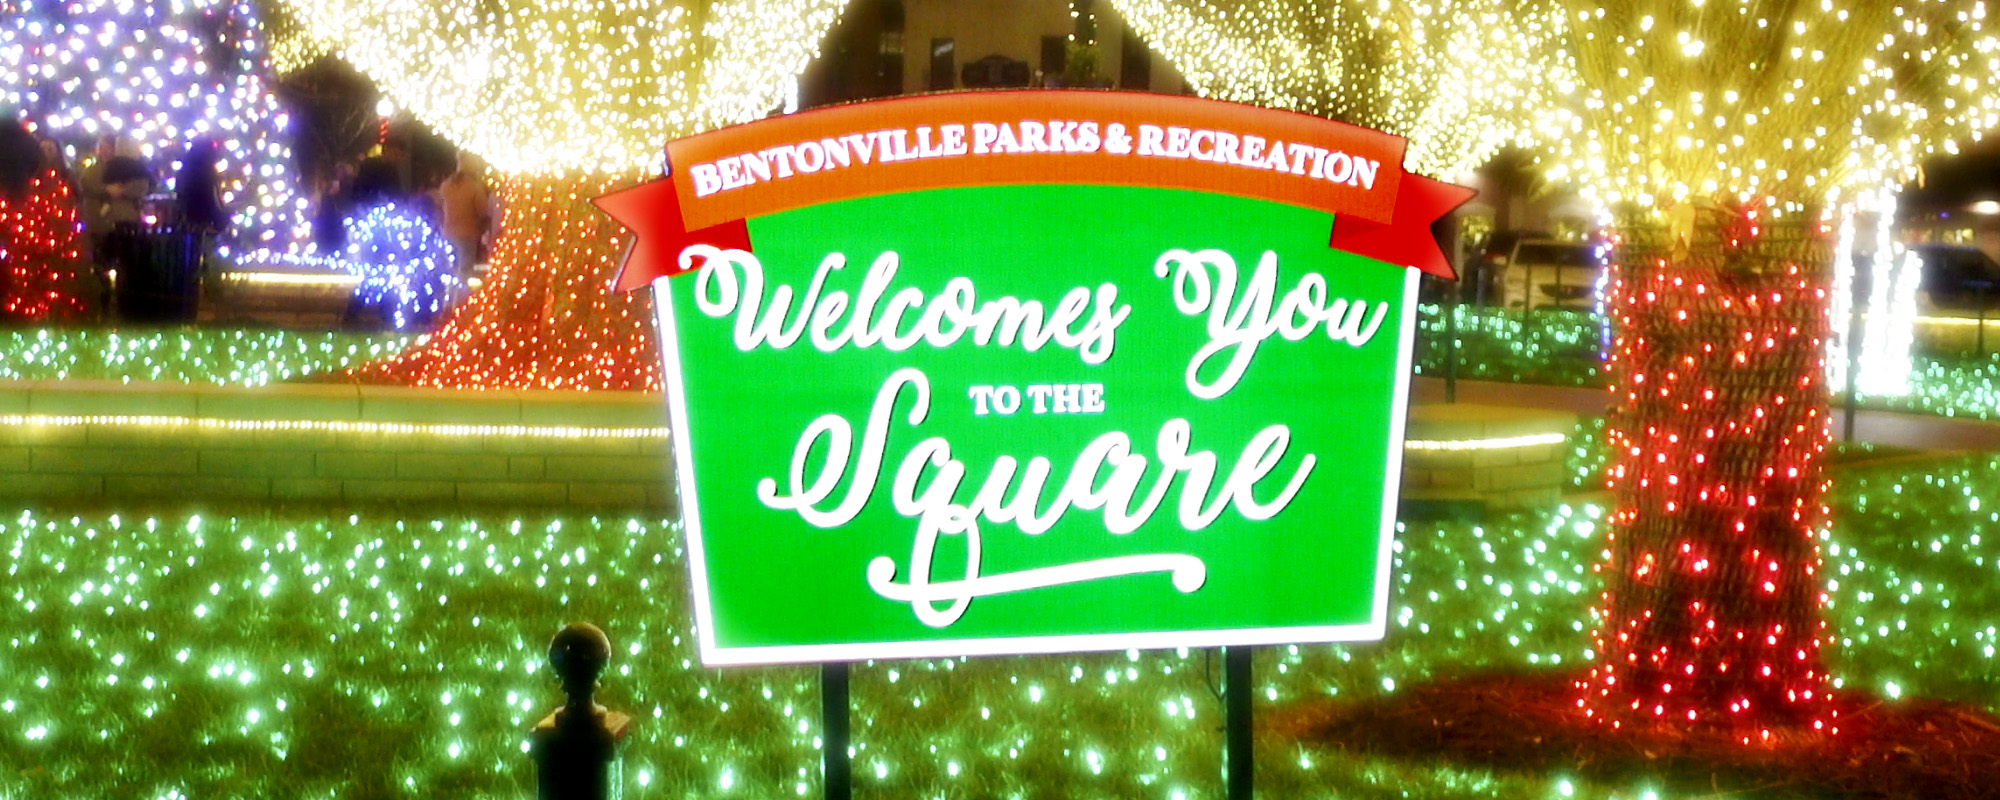 Spotlight Community Culture in Bentonville, Arkansas, Destination Marketing at the Lighting of the Square